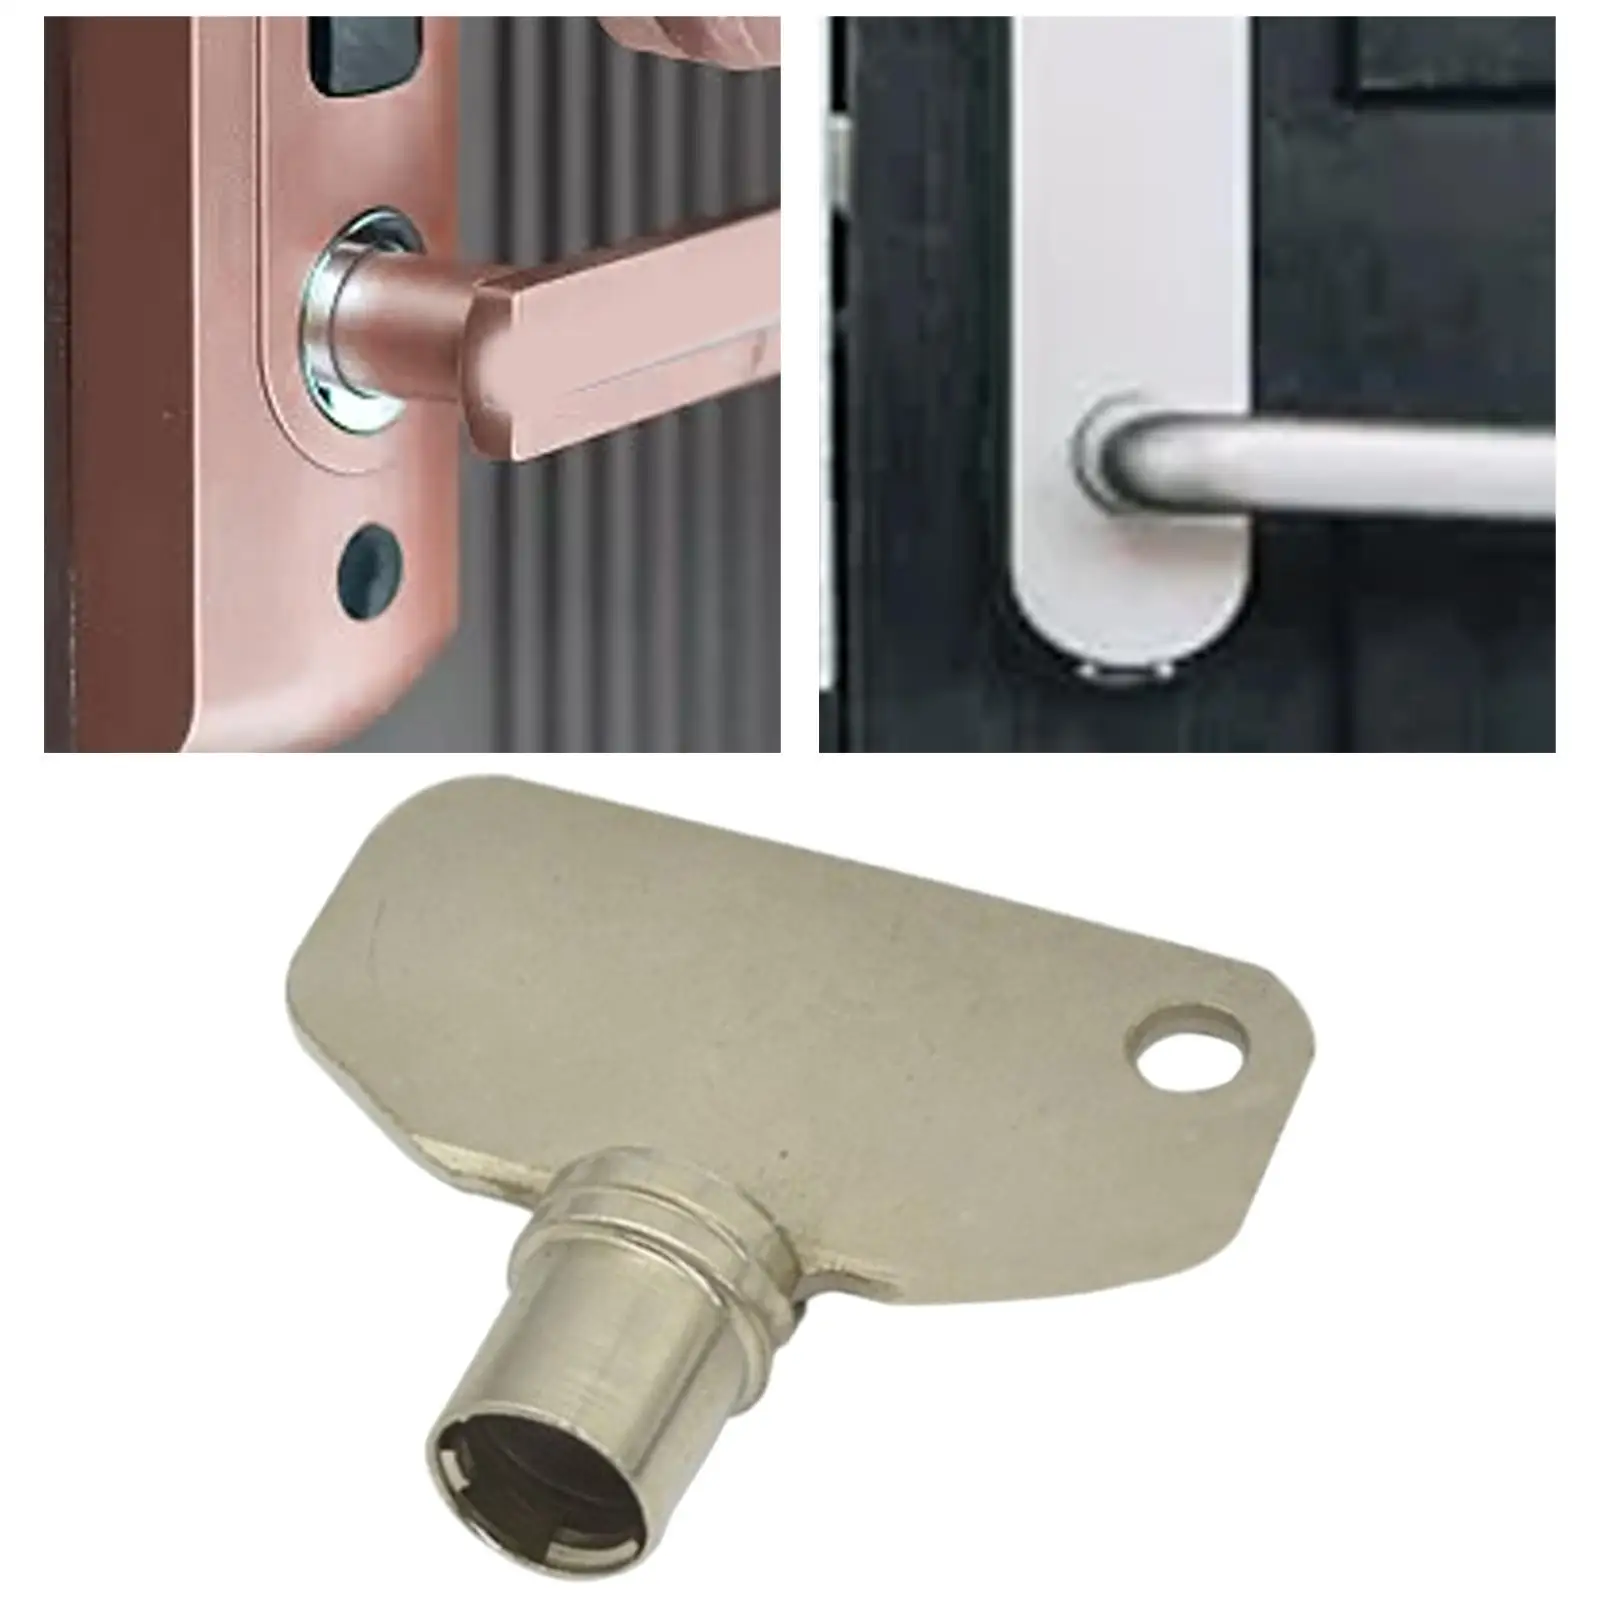 E3-5-1526-75 Barrel Key Tubular Key Hollow  for RV Motorhome Zinc  Finish Baggage Door Hardware Locking Devices